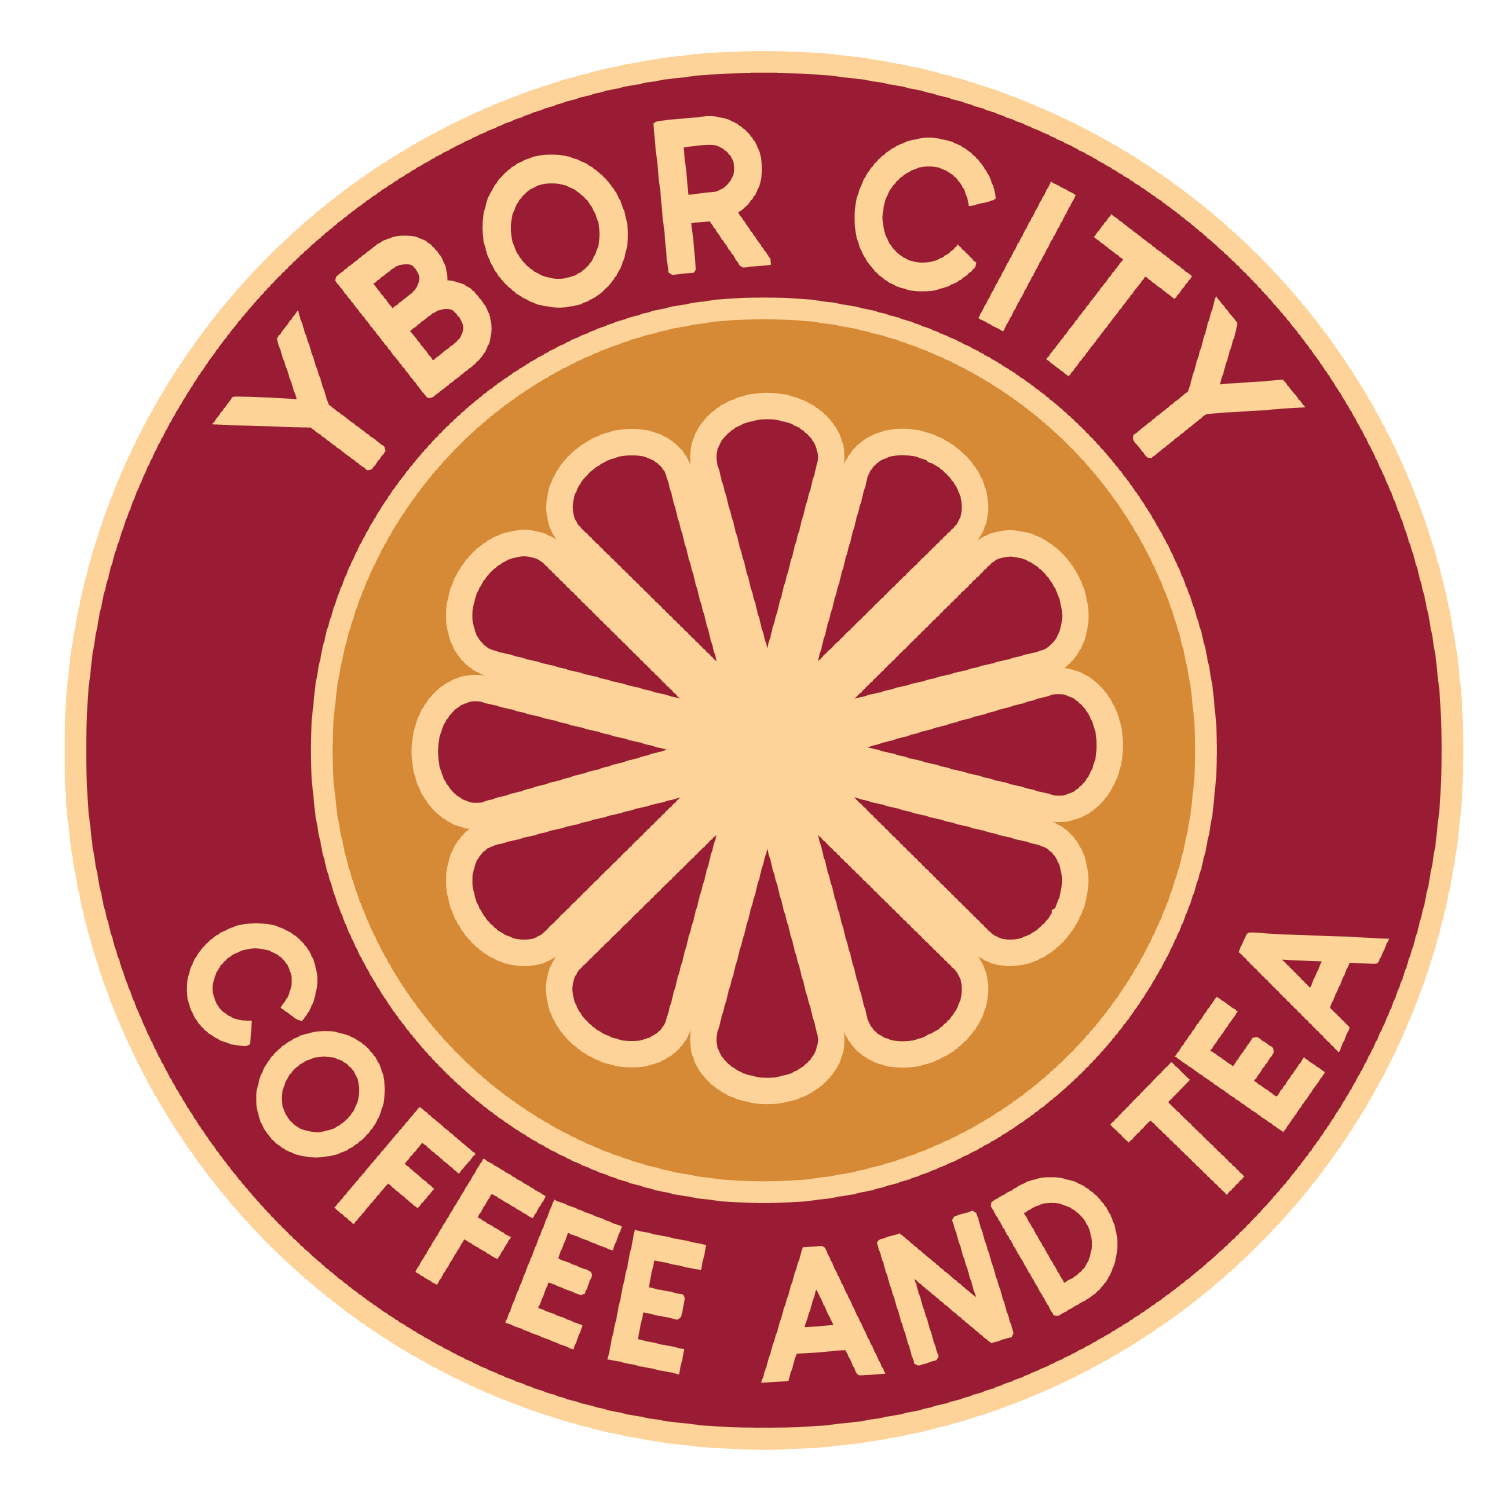 Ybor City Coffee and Tea Co